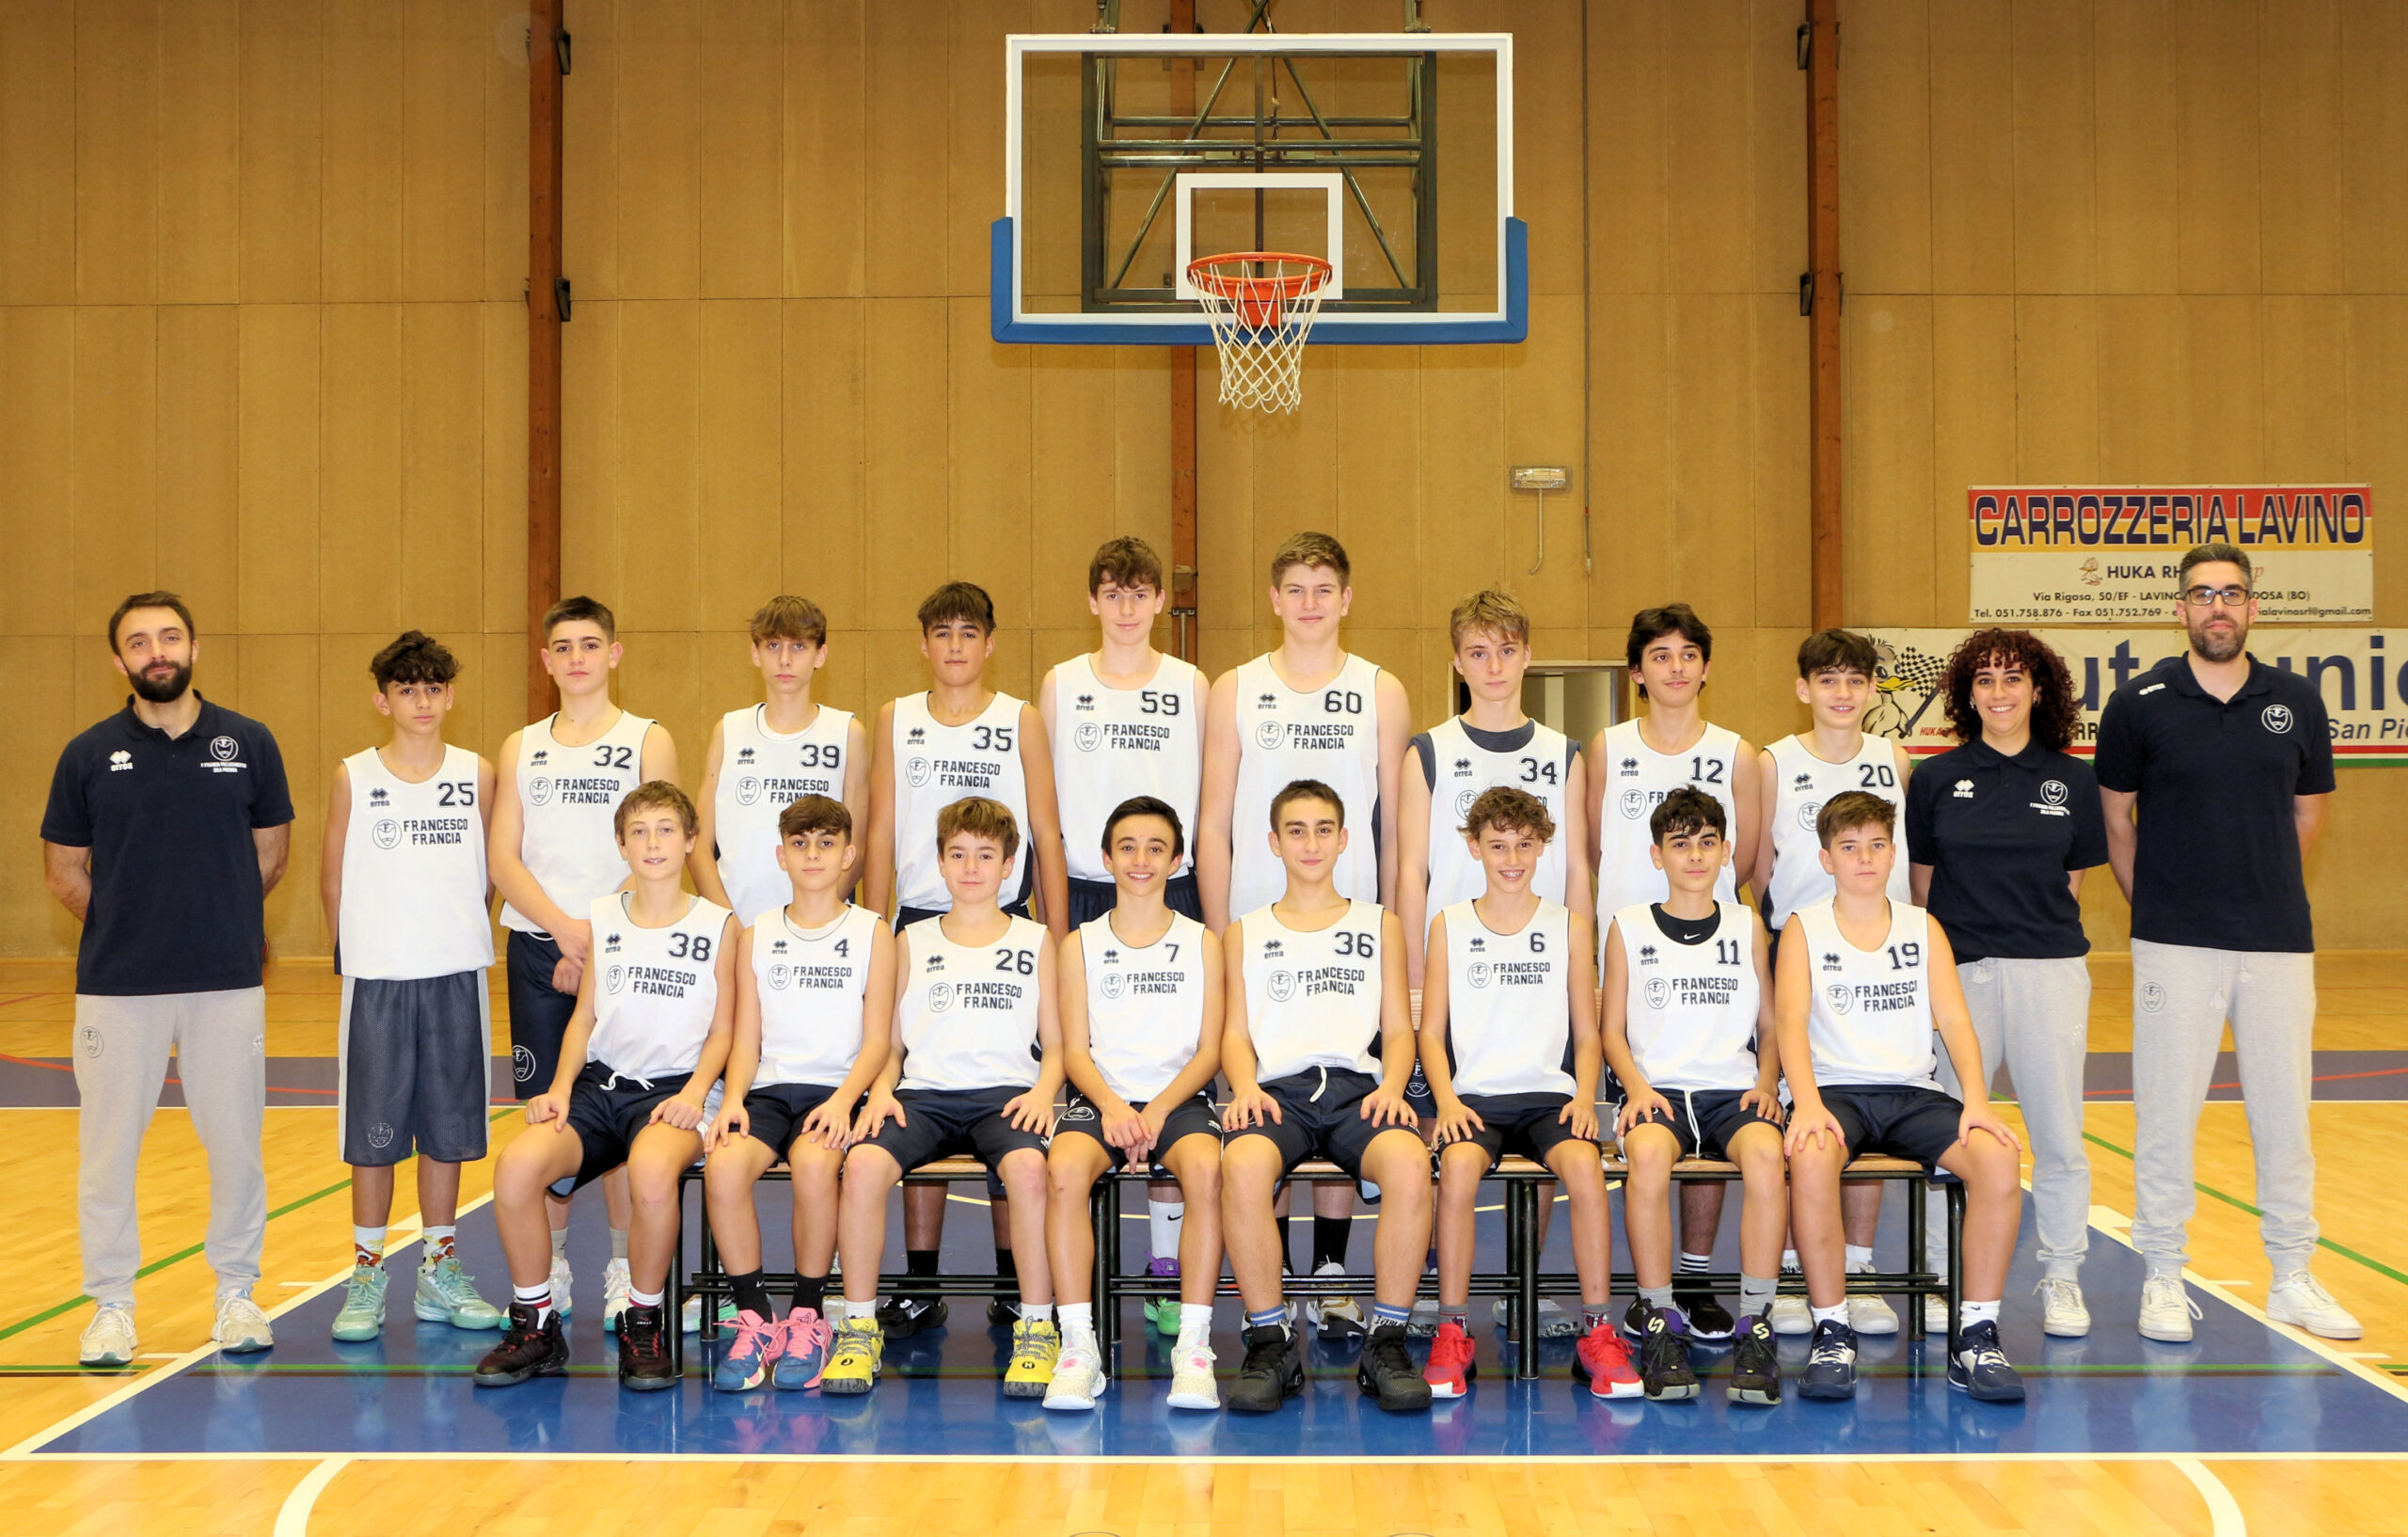 Squadra Under14 Silver - Francesco Francia Basket